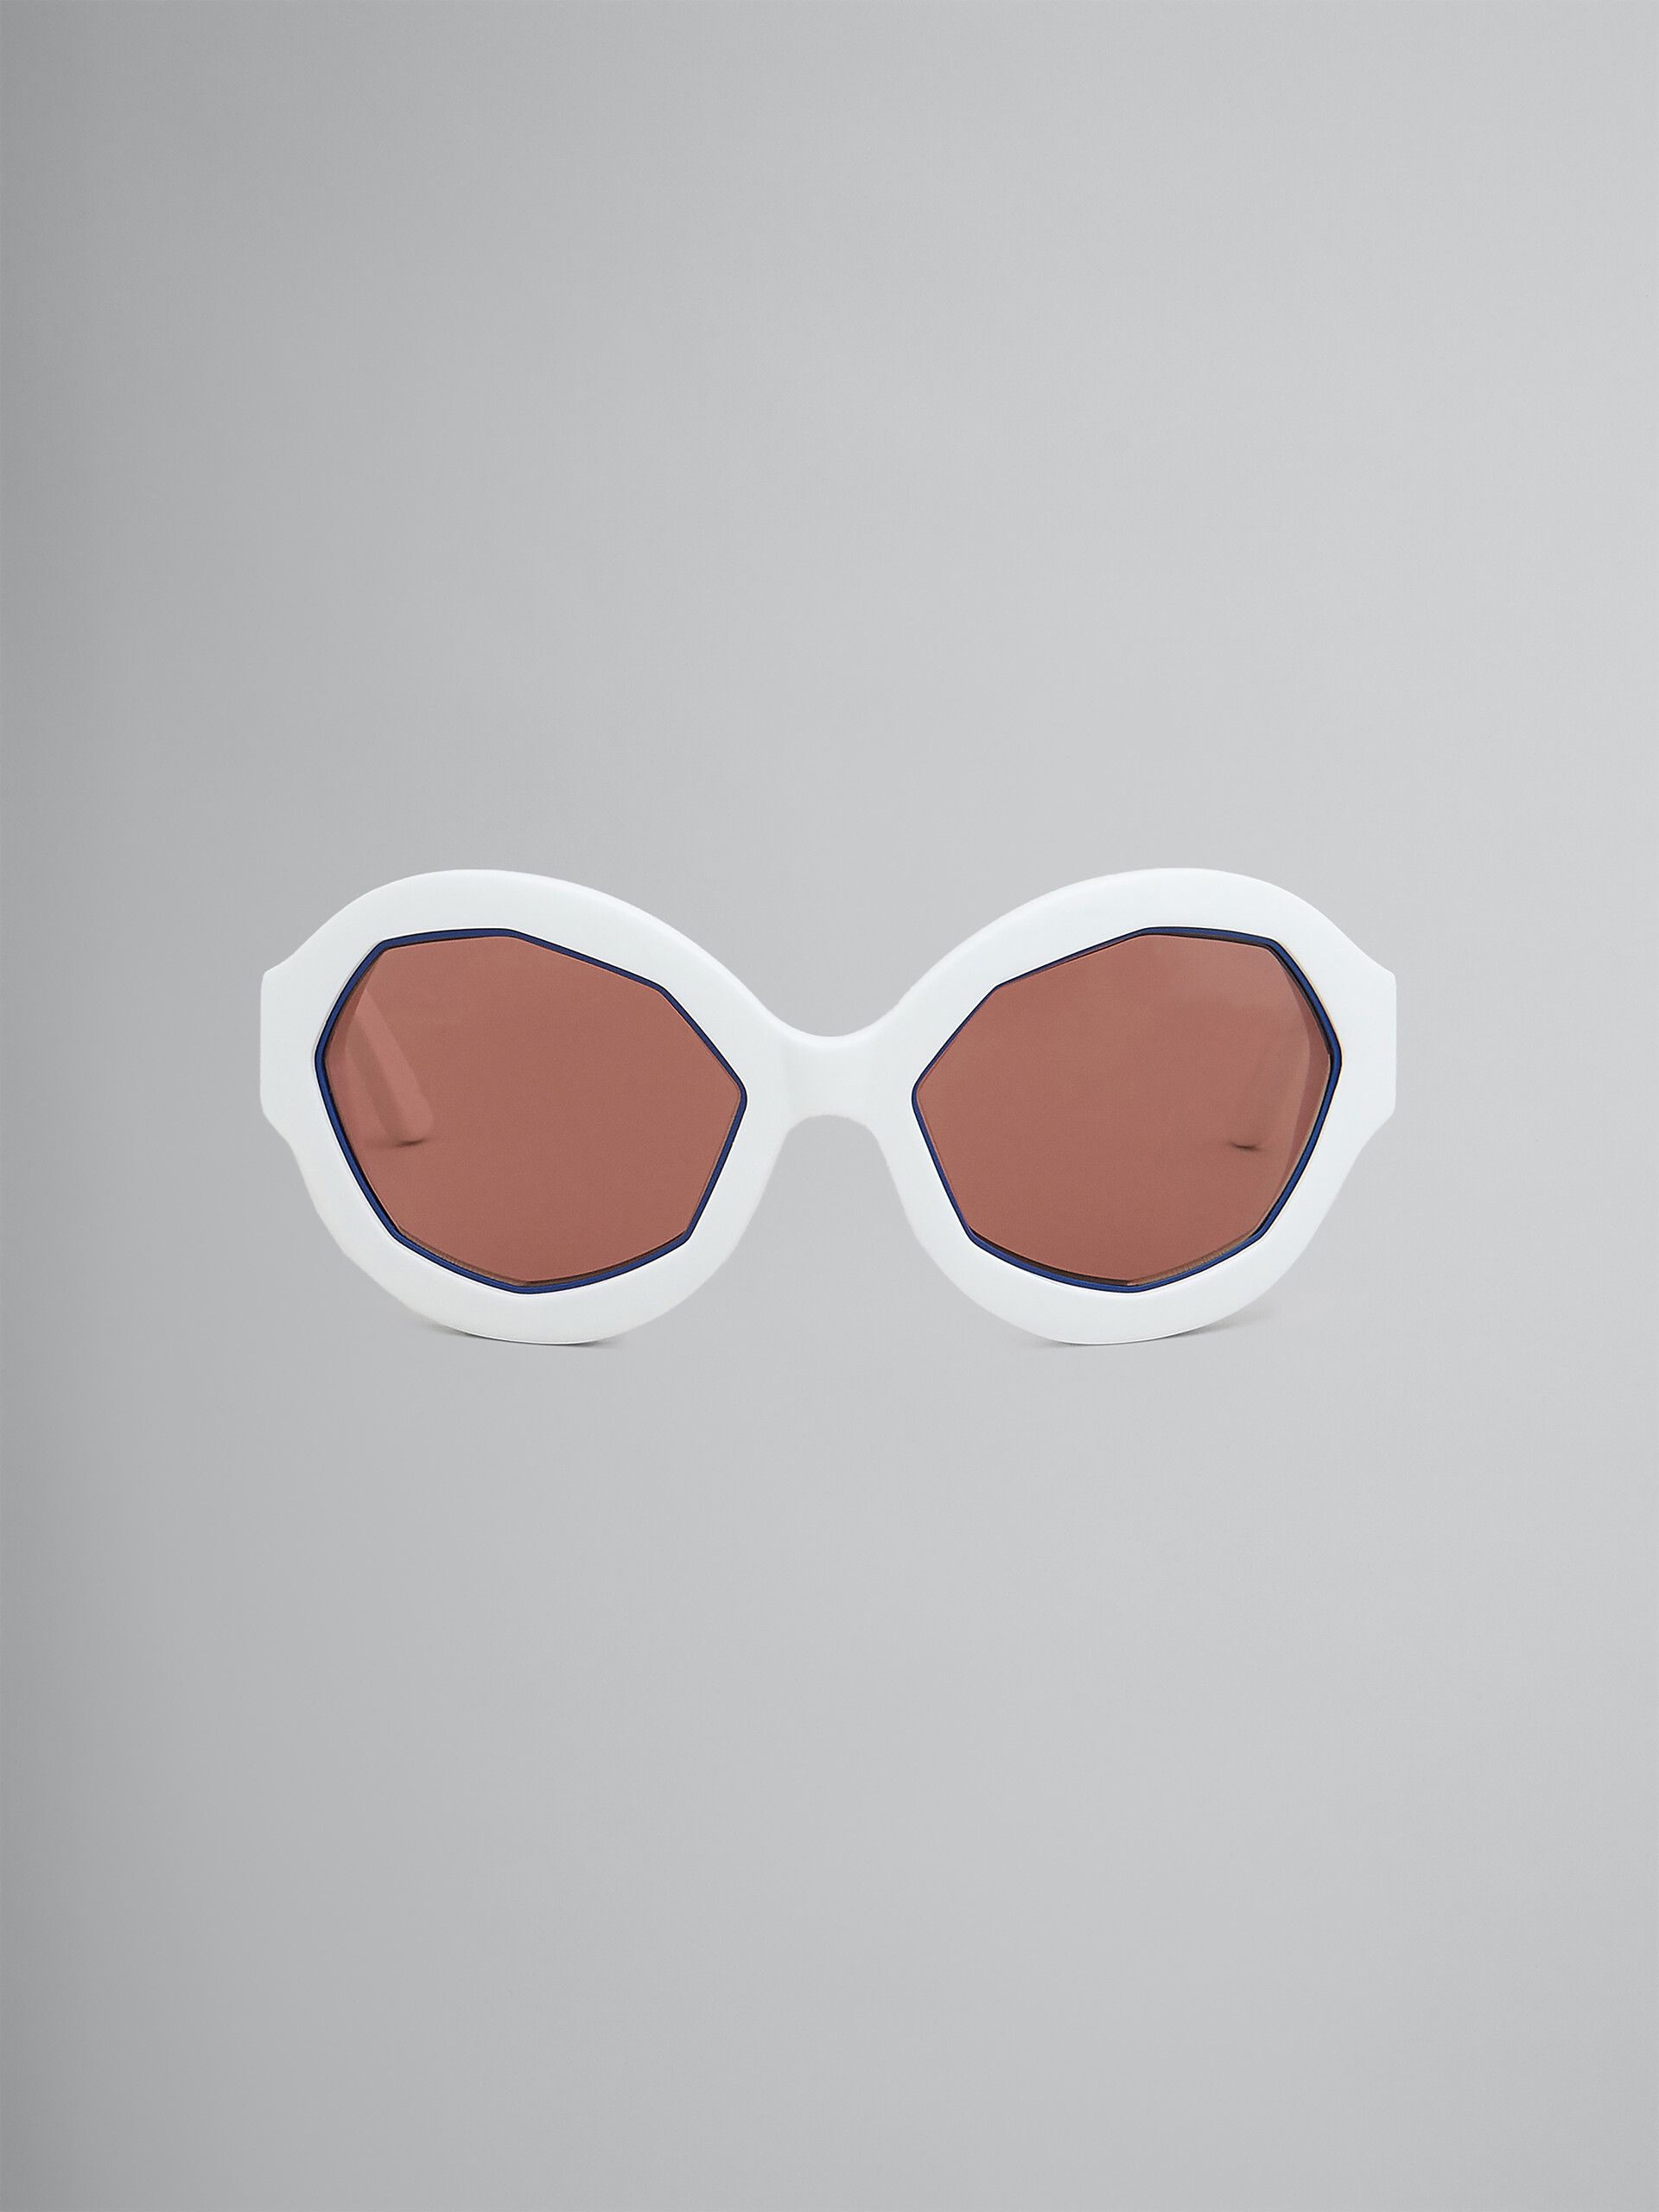 CUMULUS CLOUD white acetate sunglasses - Optical - Image 1